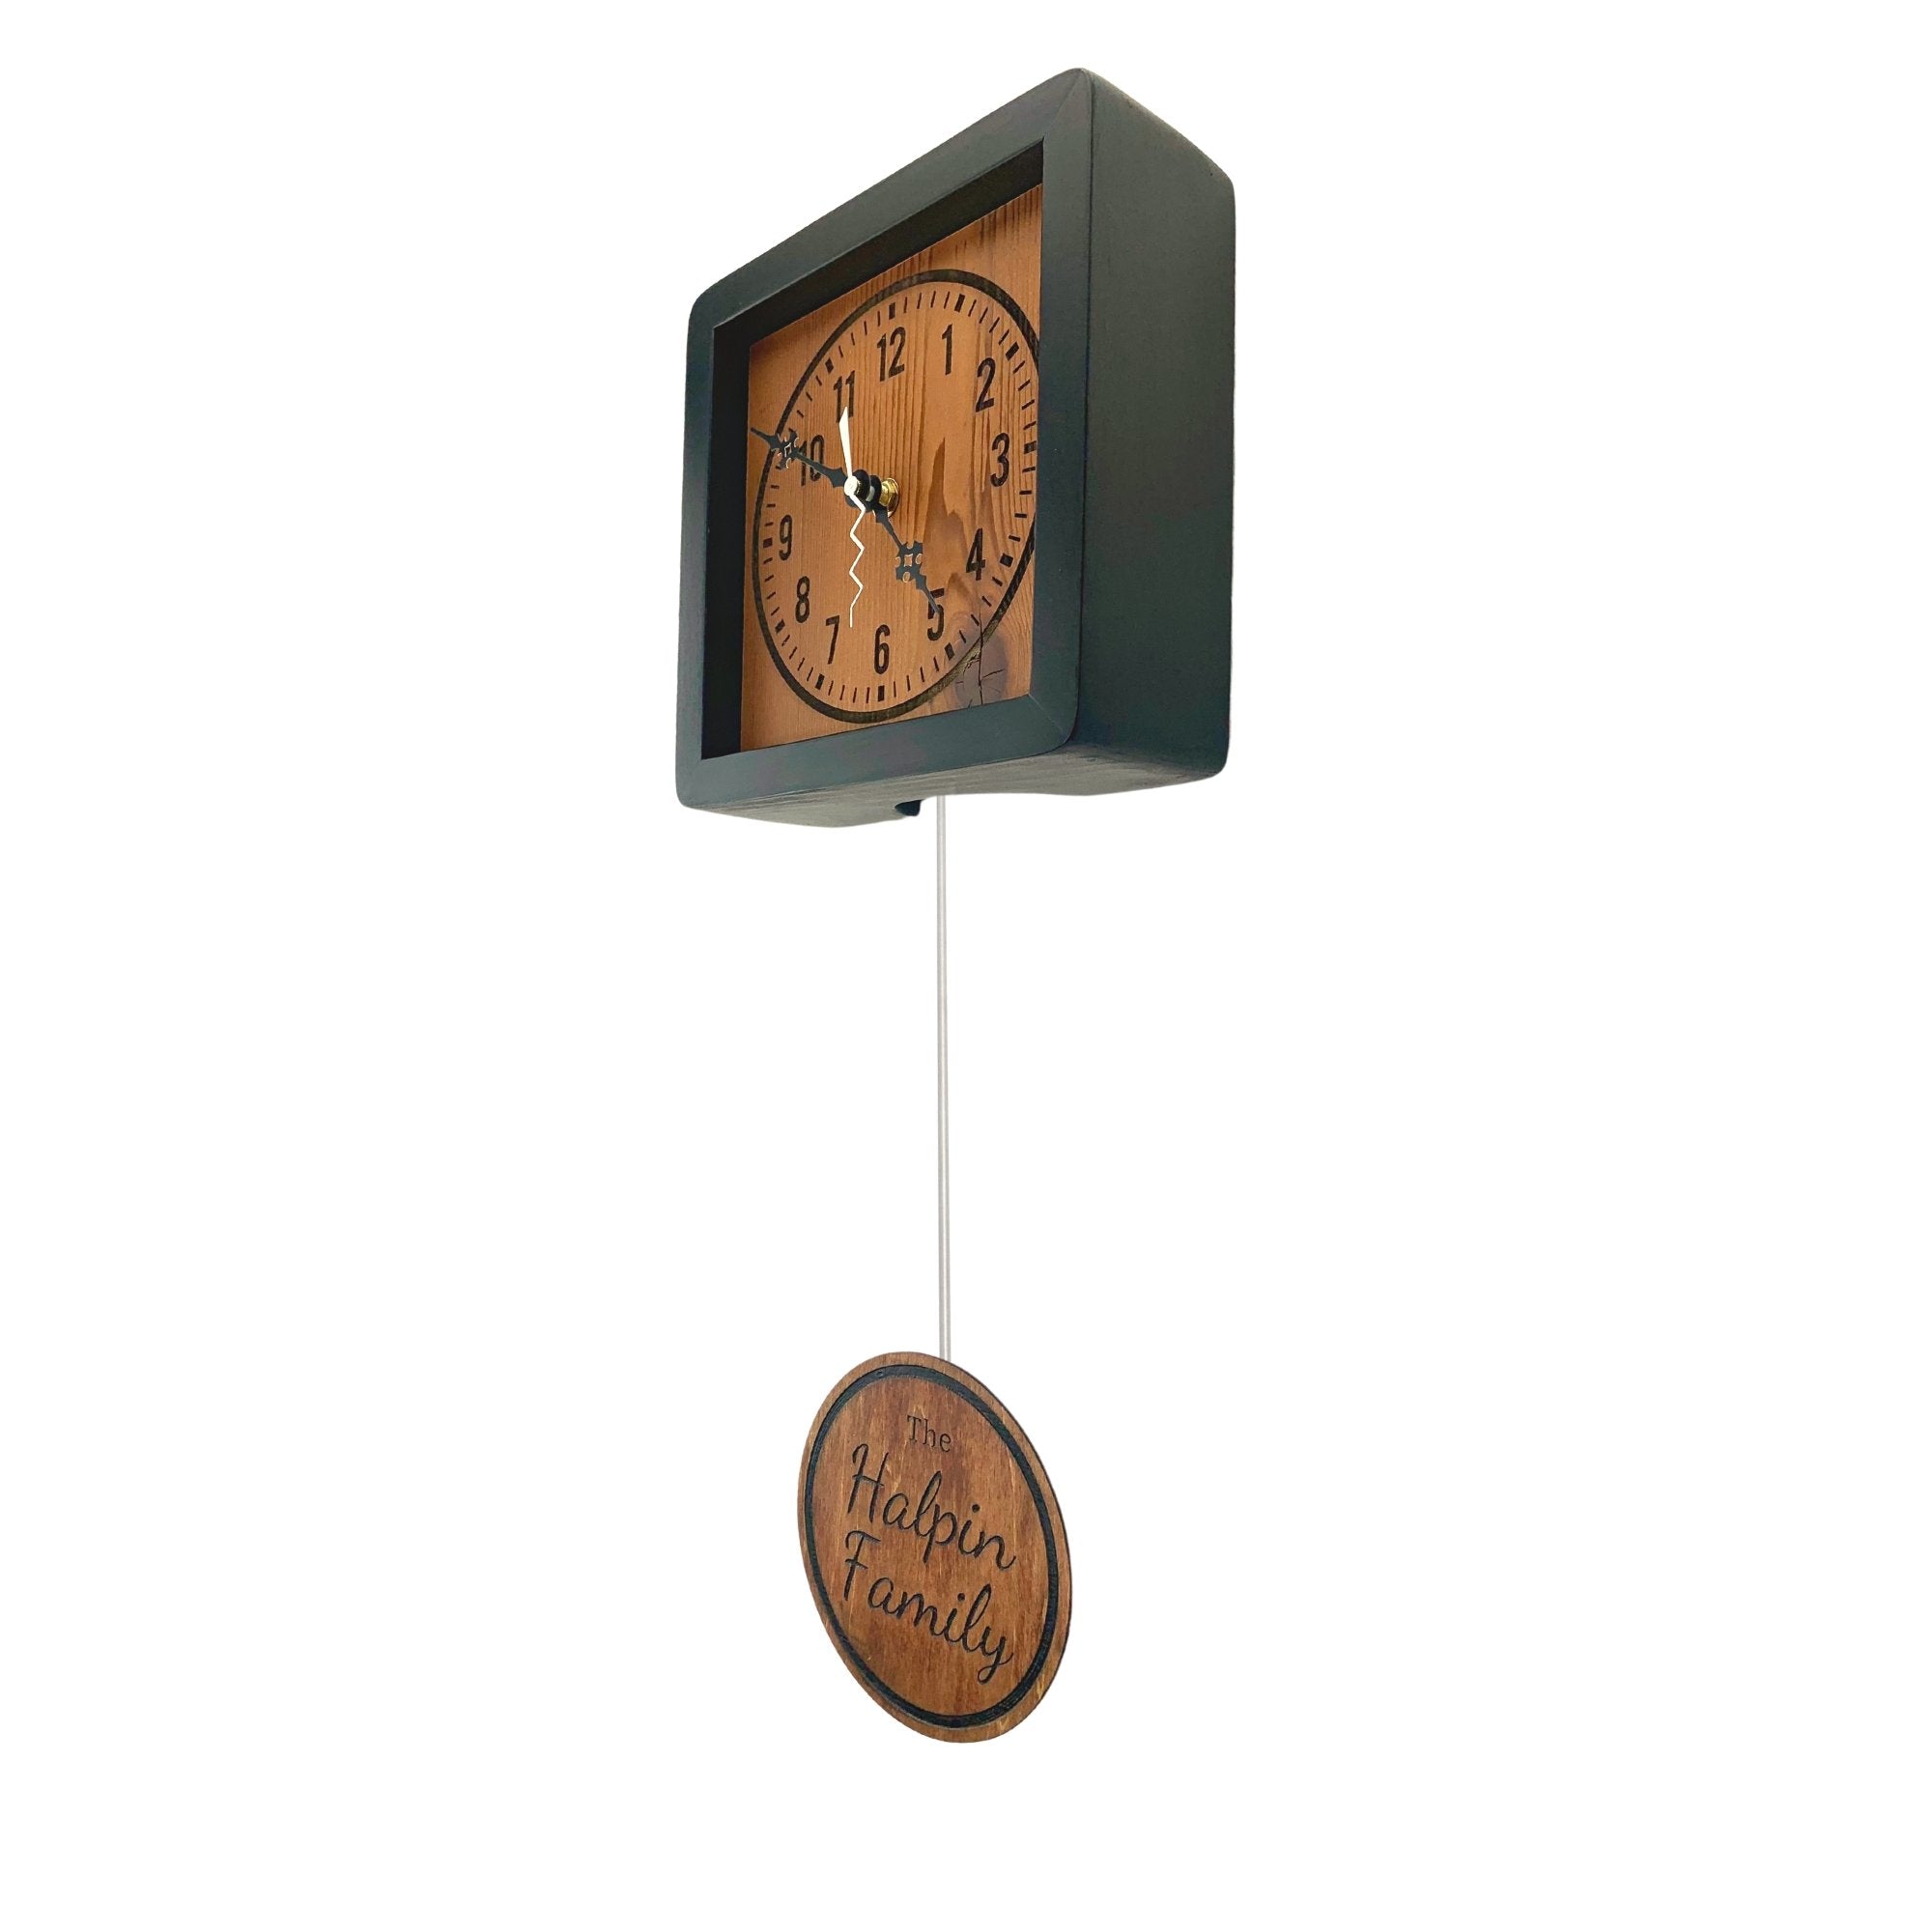 KingWood Personalized Pendulum Wall Clock bottom right view on wall